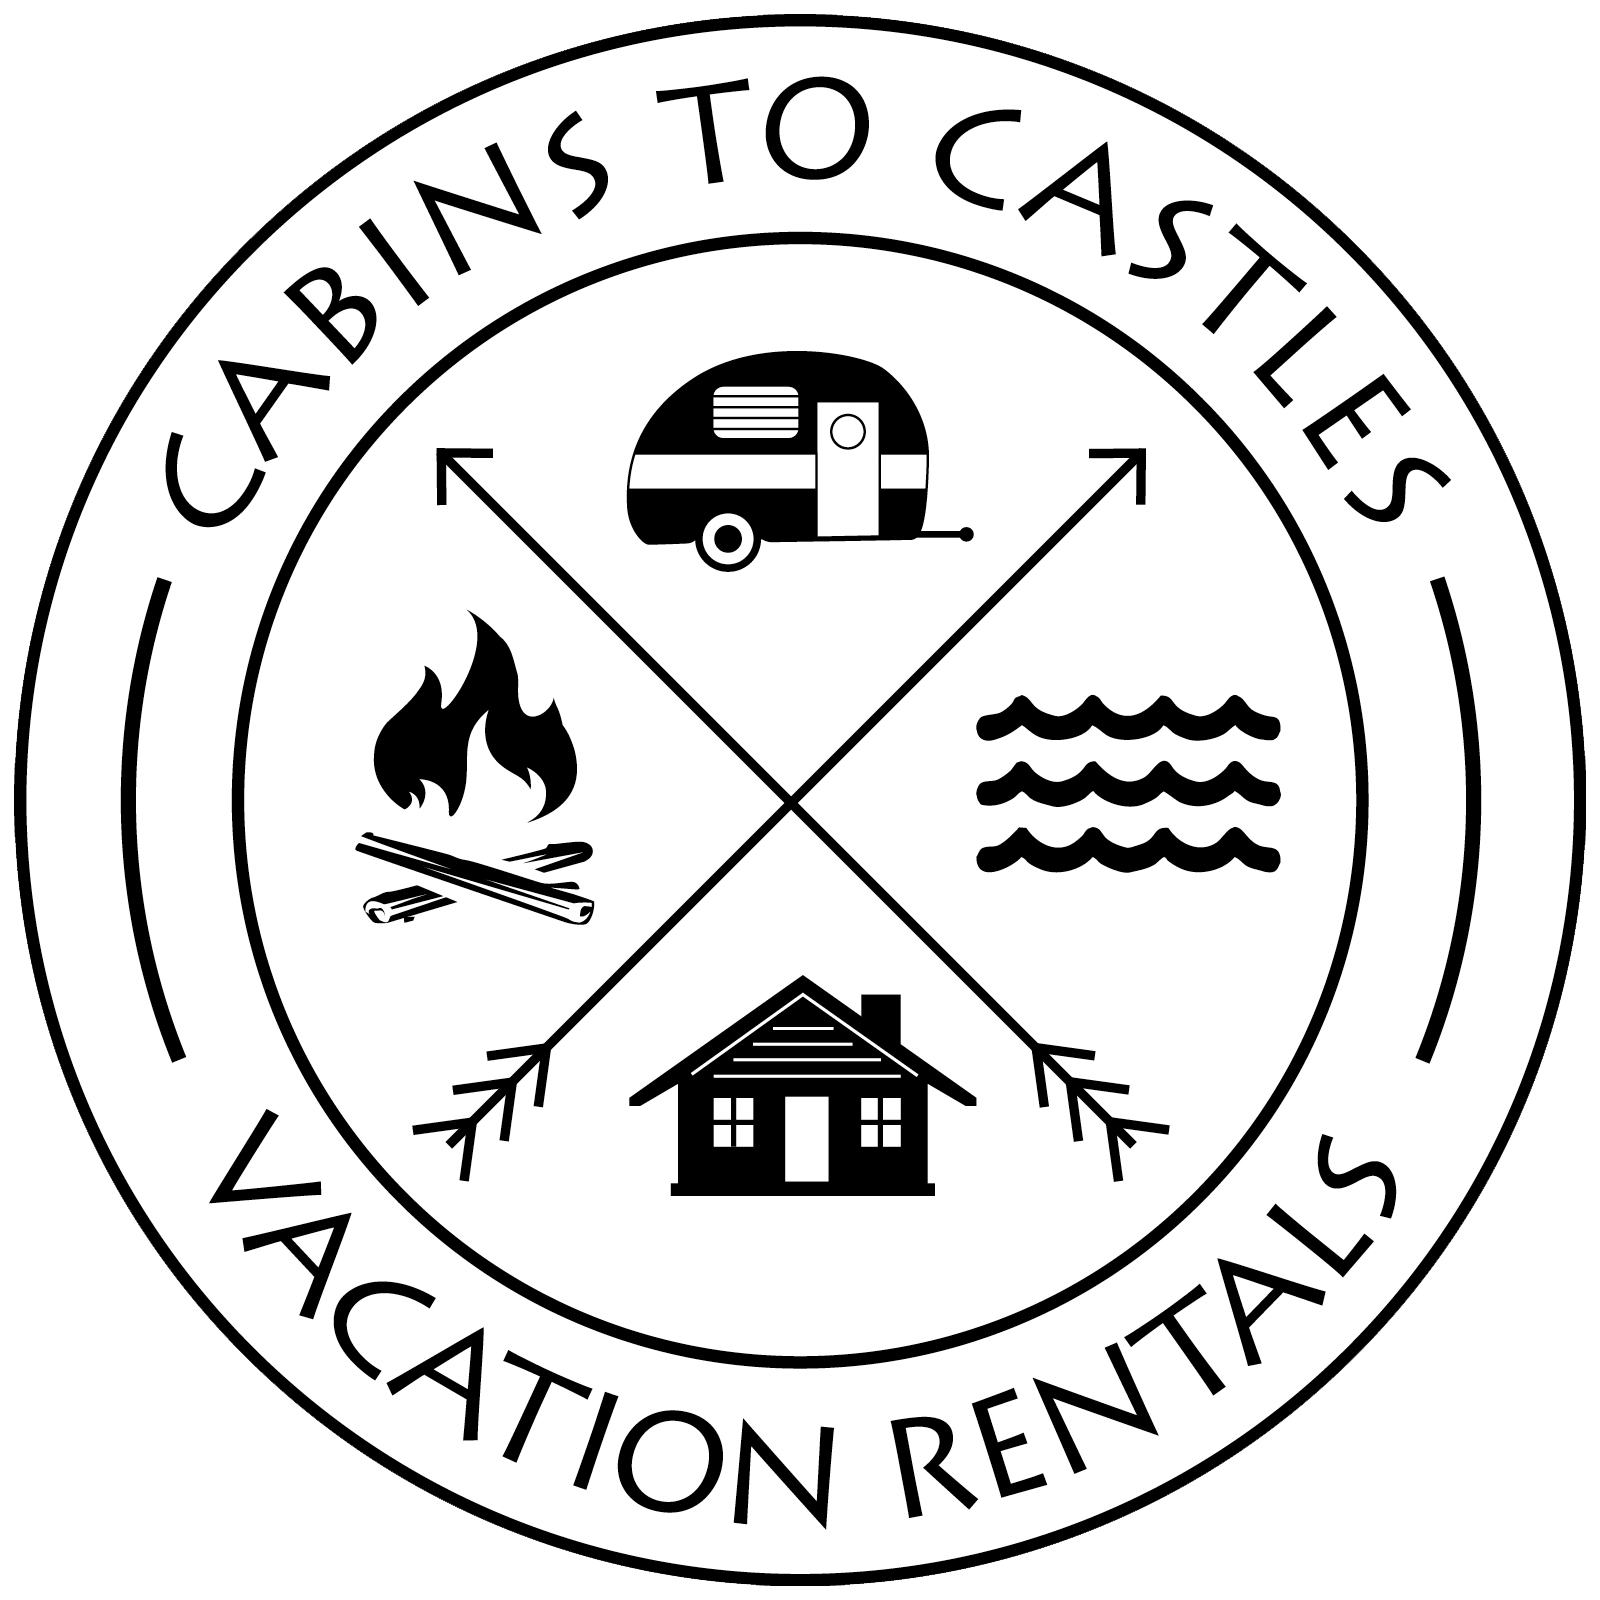 Cabins to Castles Vacation Rentals & RV Park